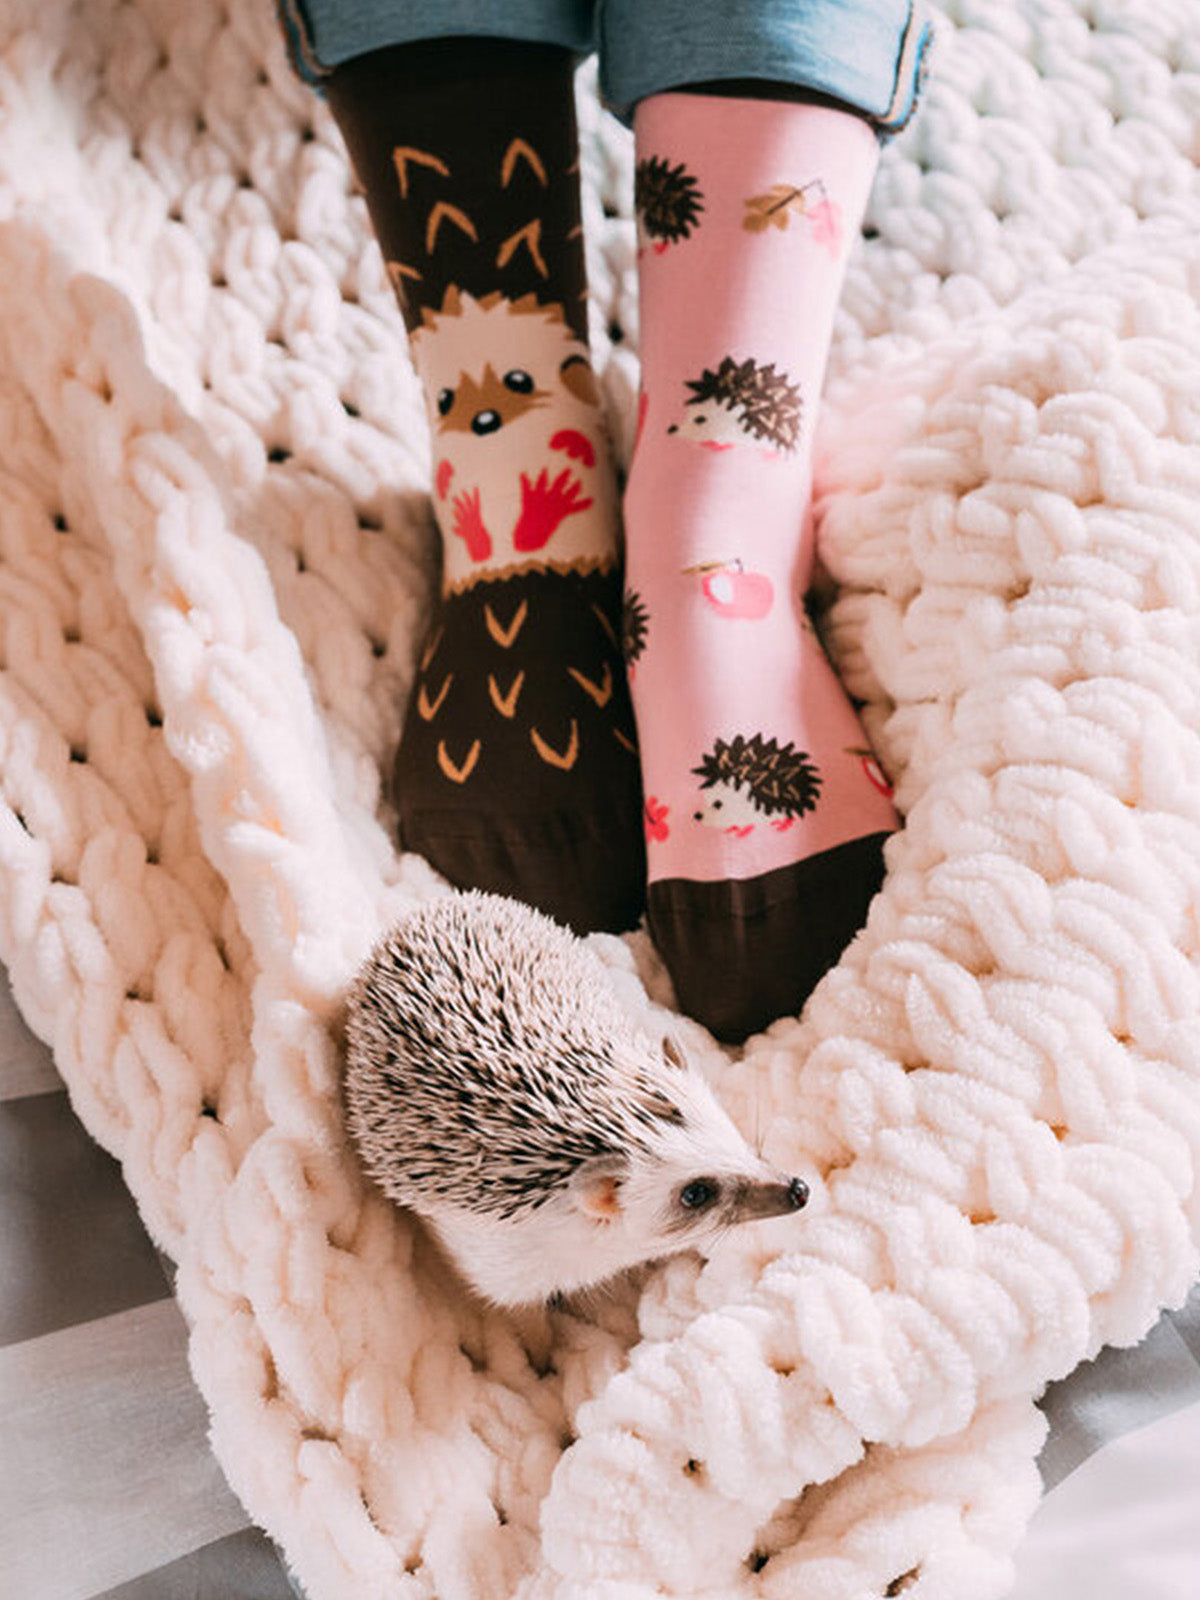 Regular Socks Hedgehog